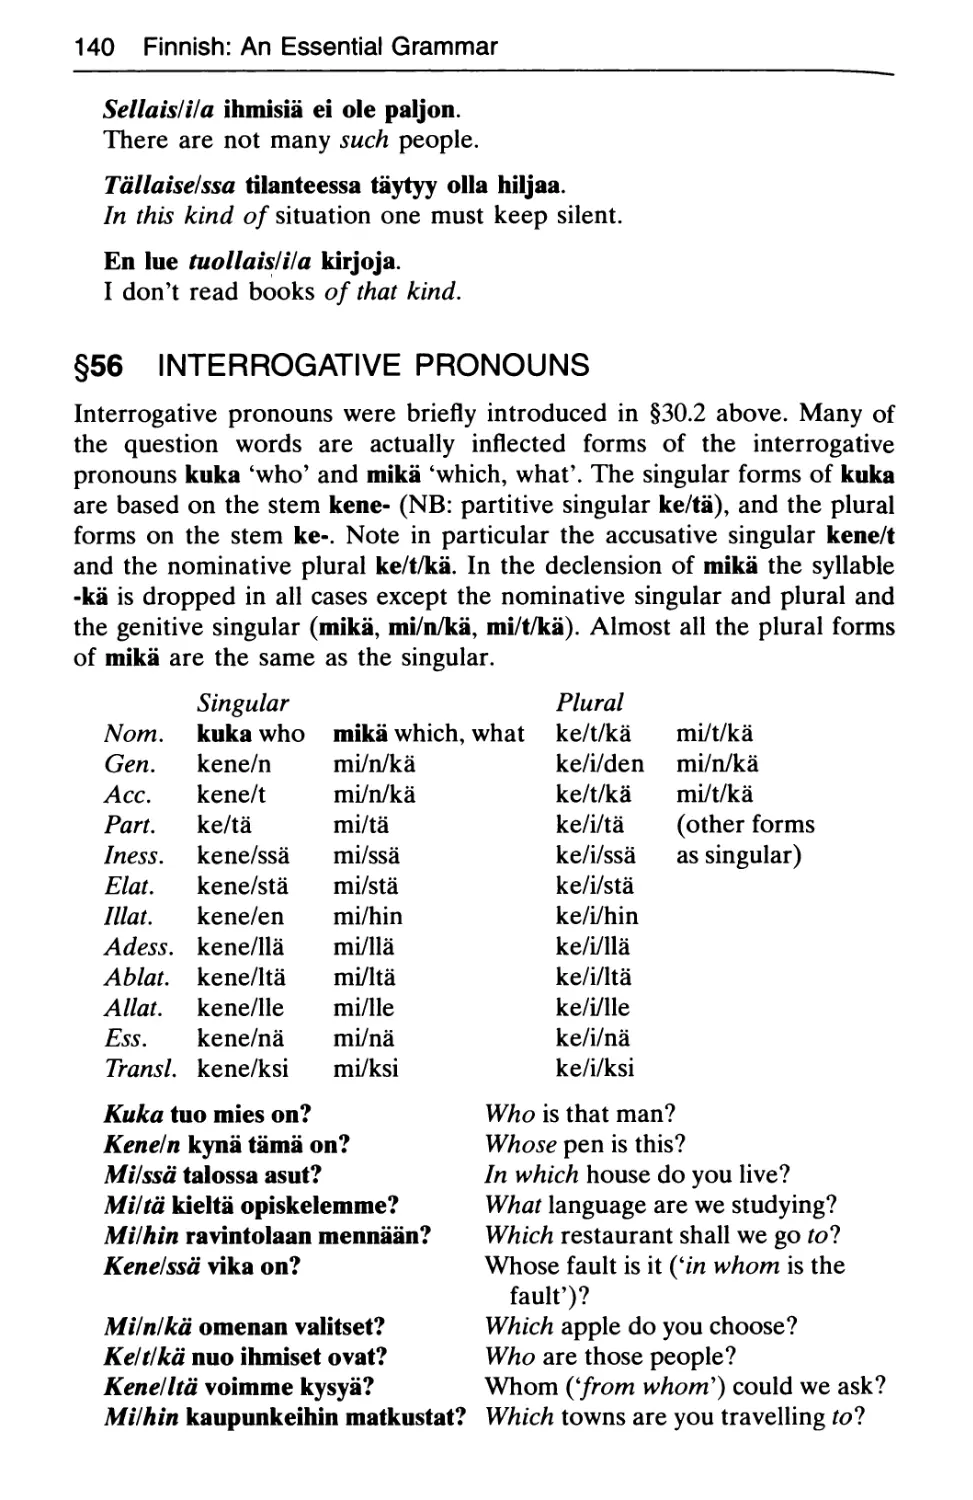 §56 Interrogative pronouns